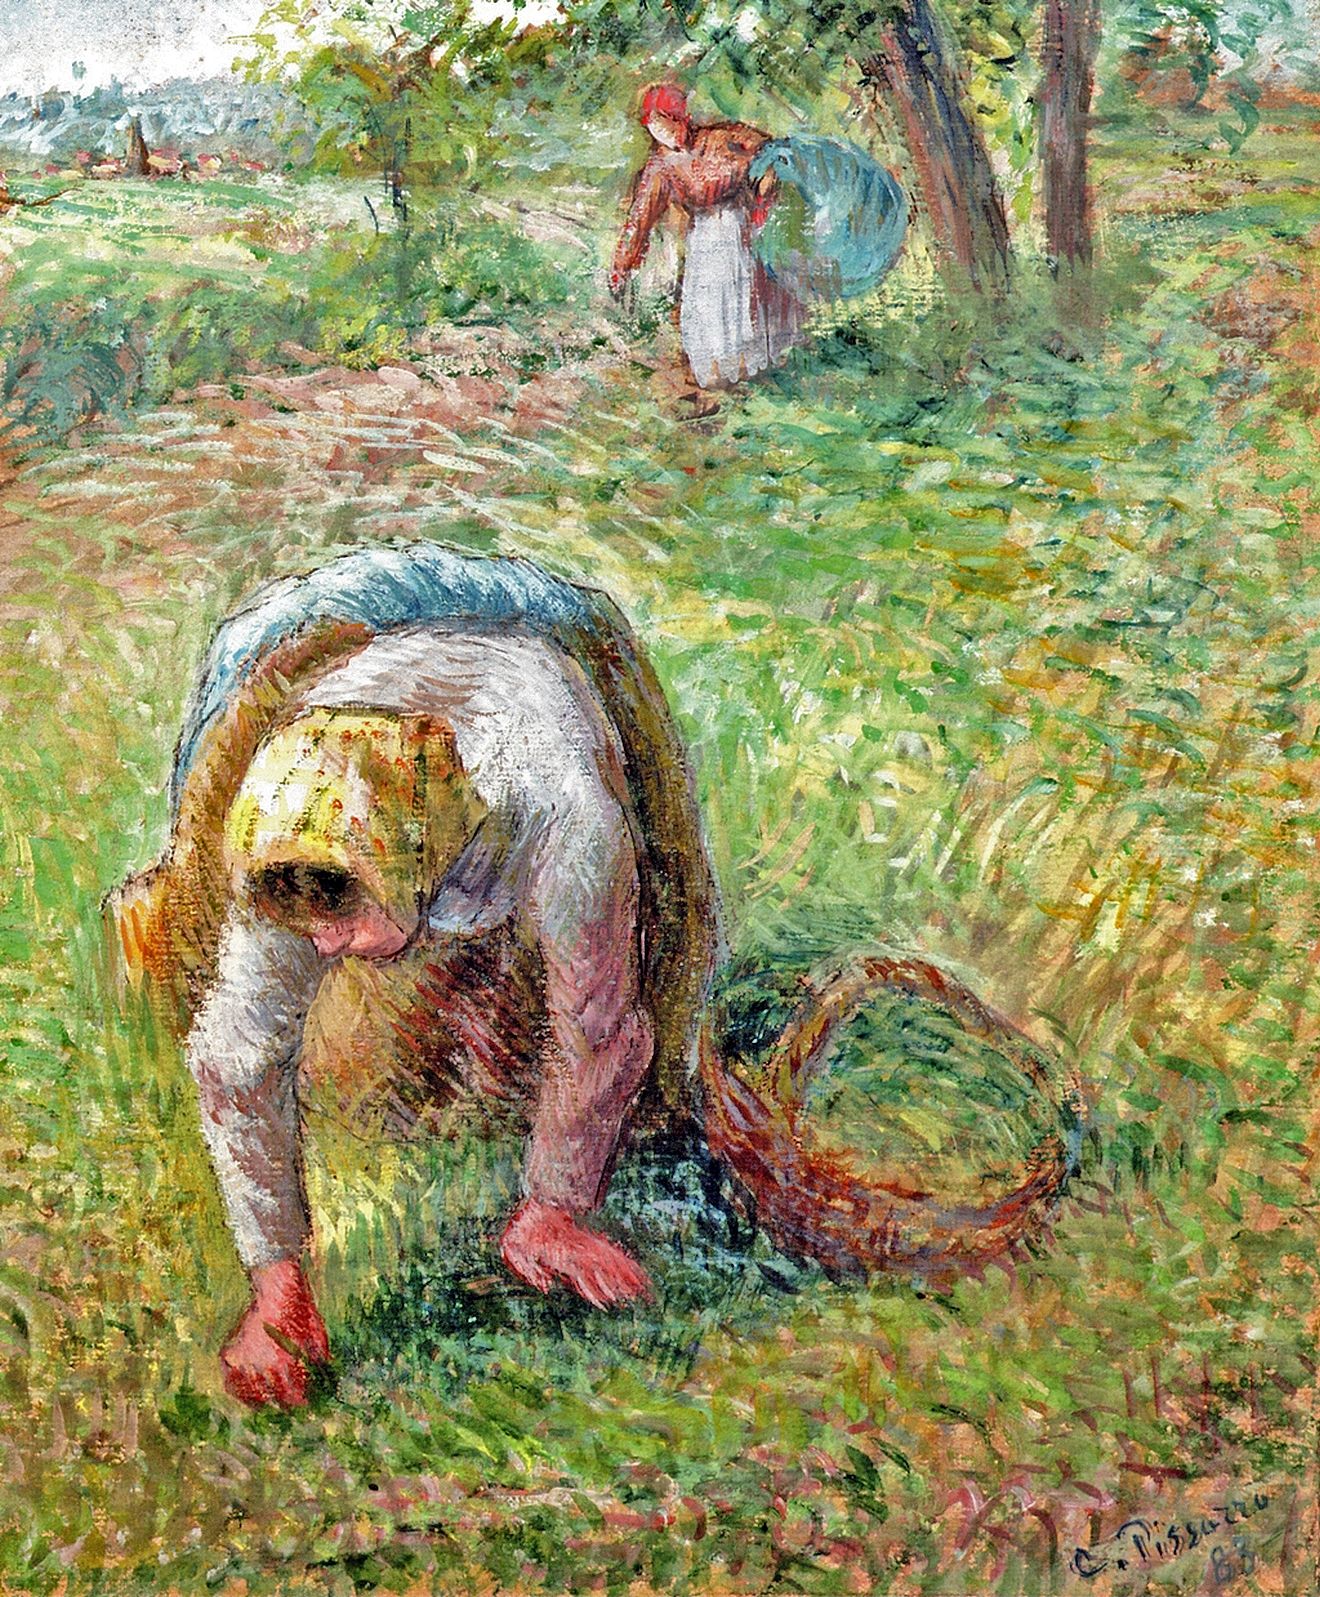 Camille+Pissarro-1830-1903 (356).jpg